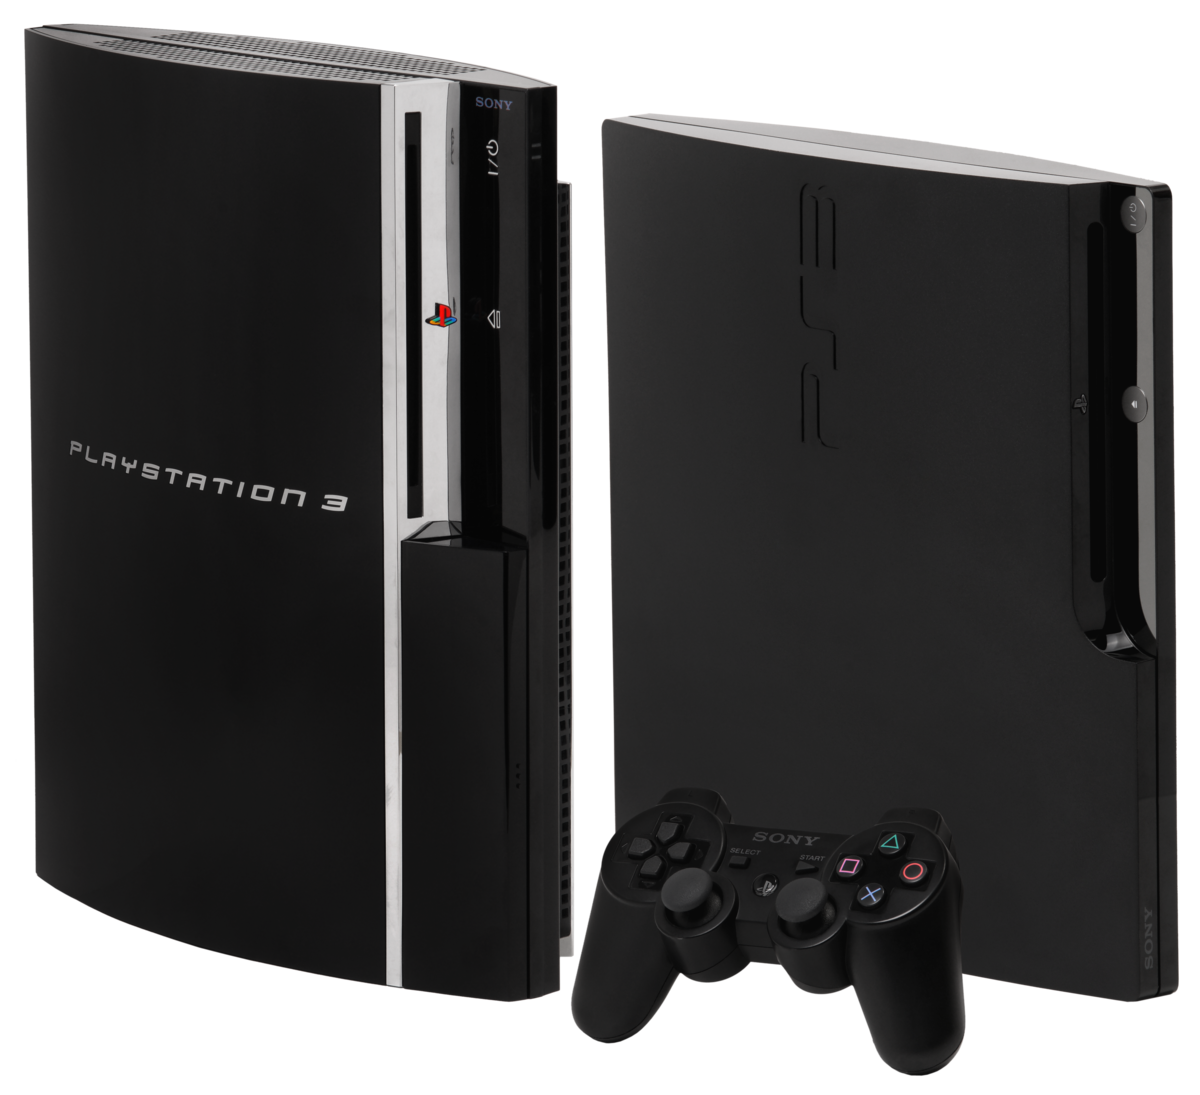 PlayStation 3 - Wikipedia, la enciclopedia libre